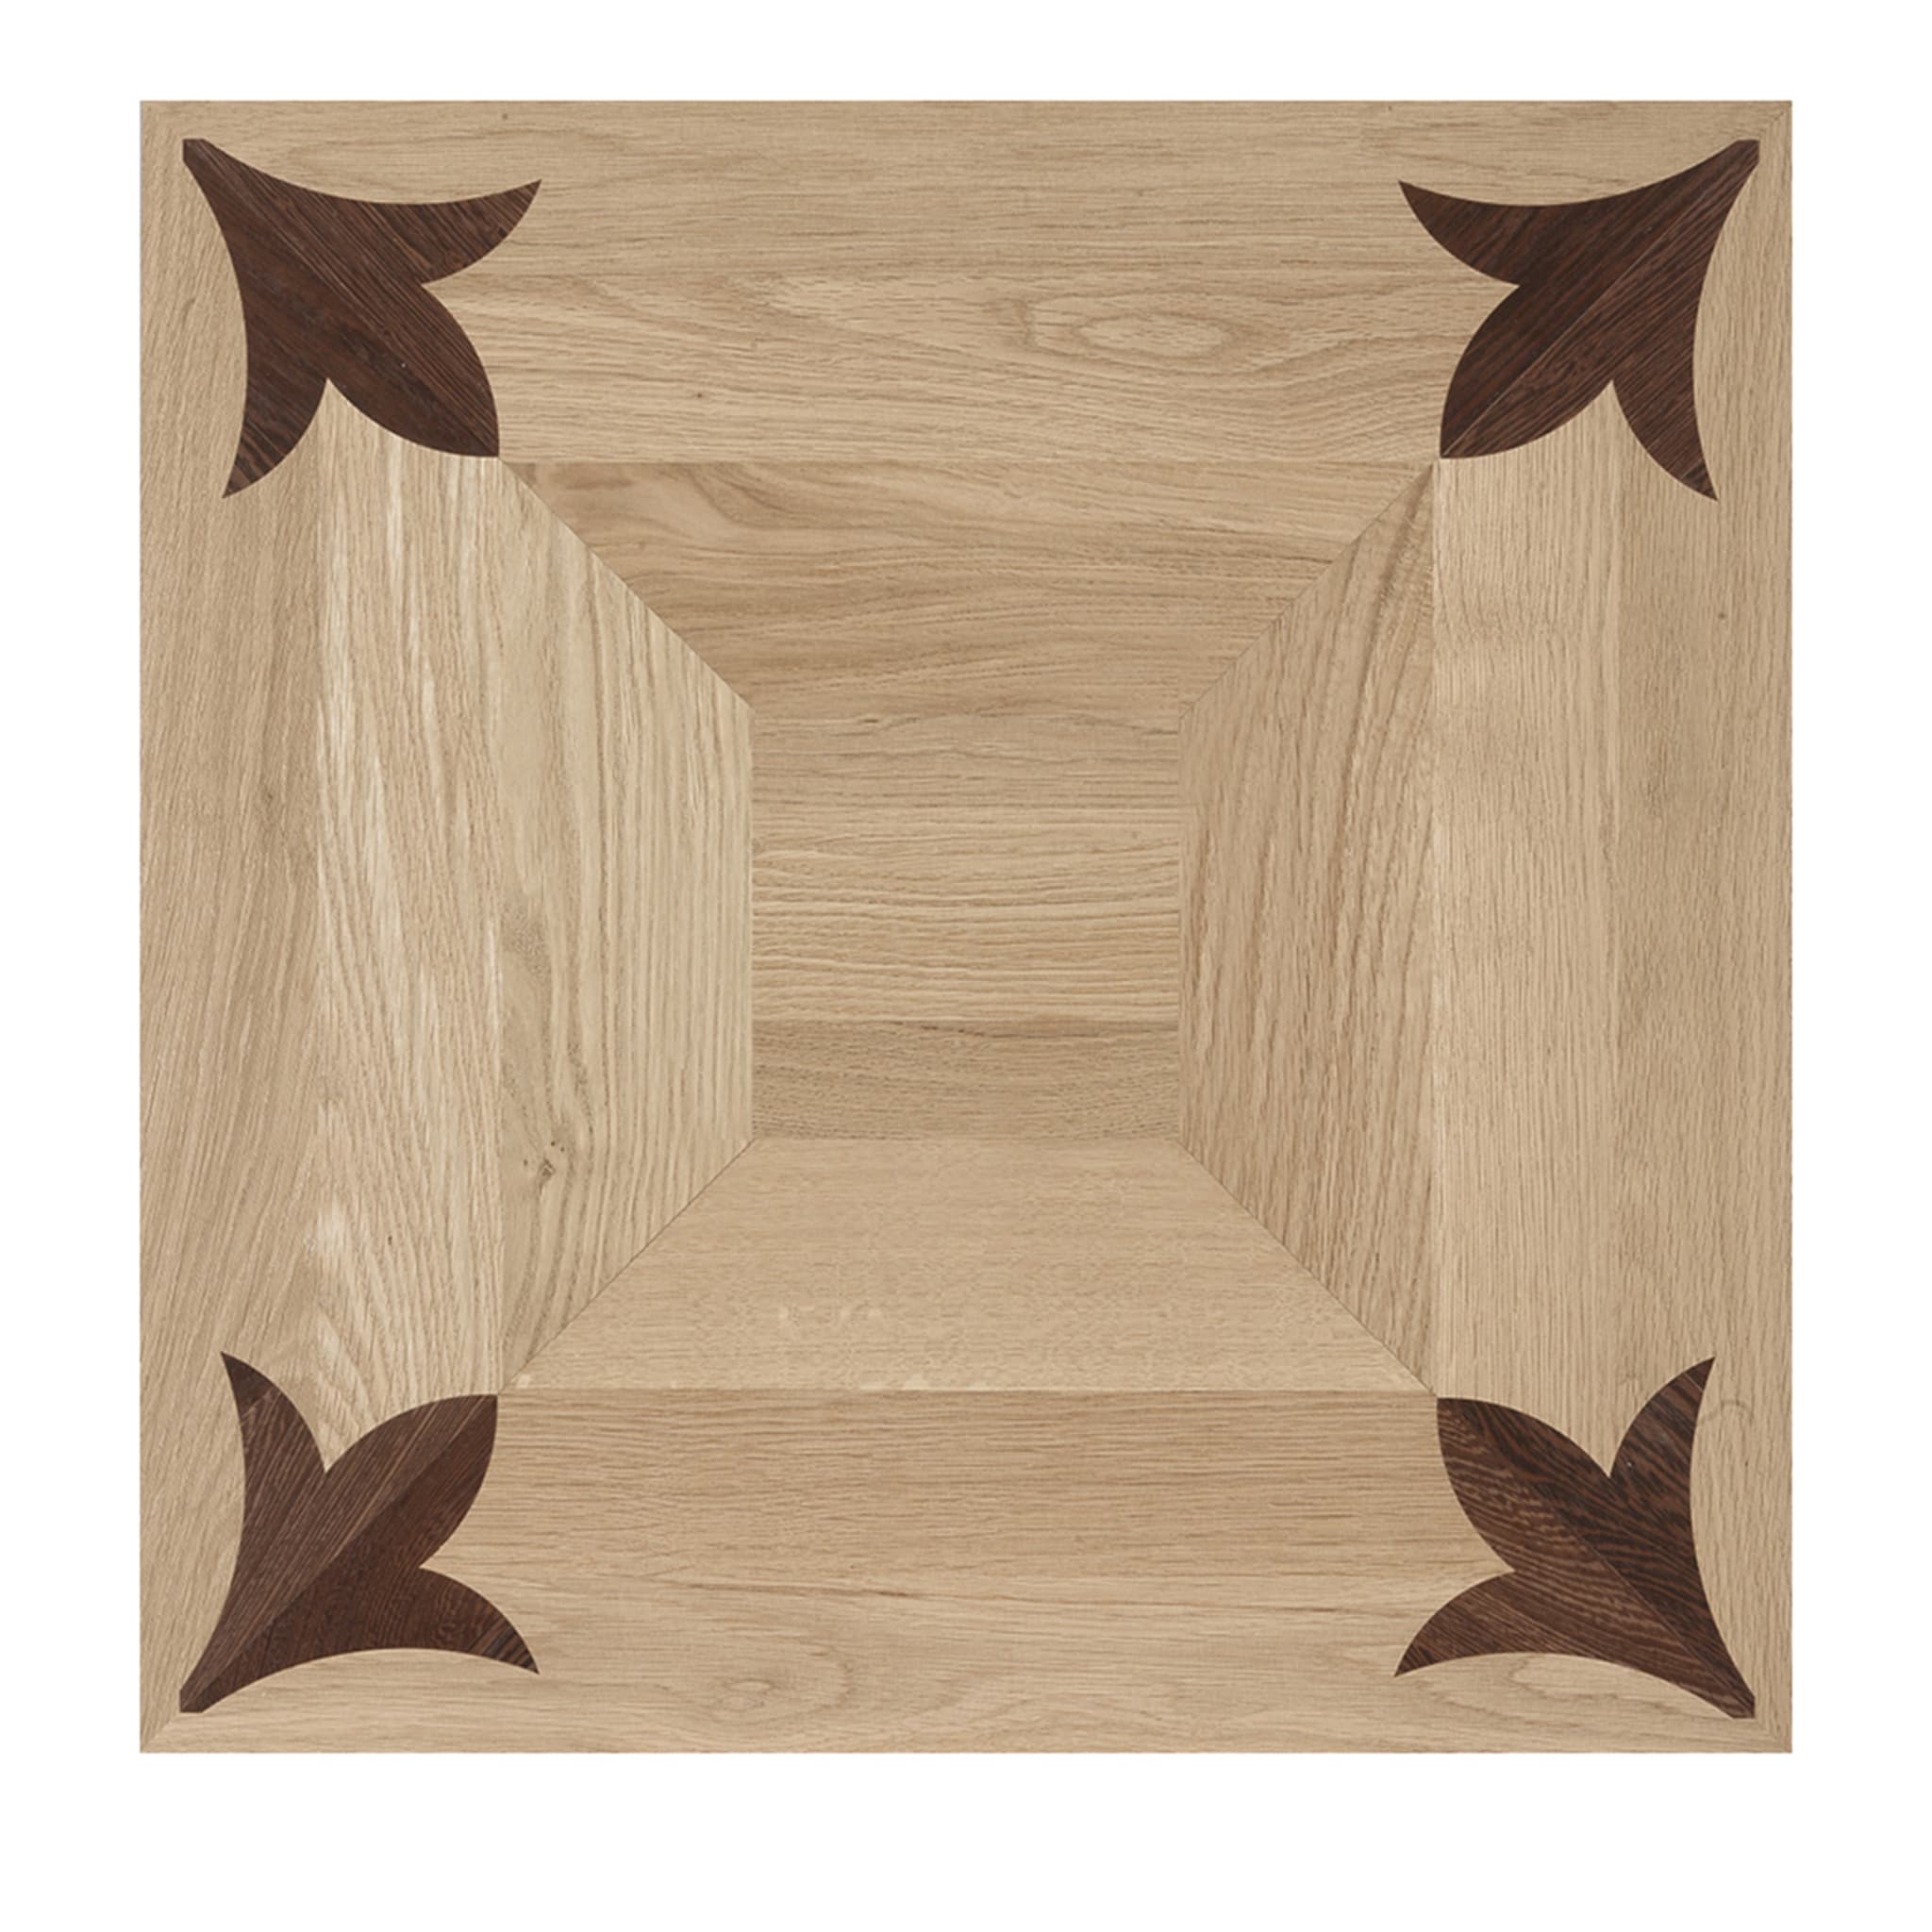 Intarsia Wood Flooring - Main view